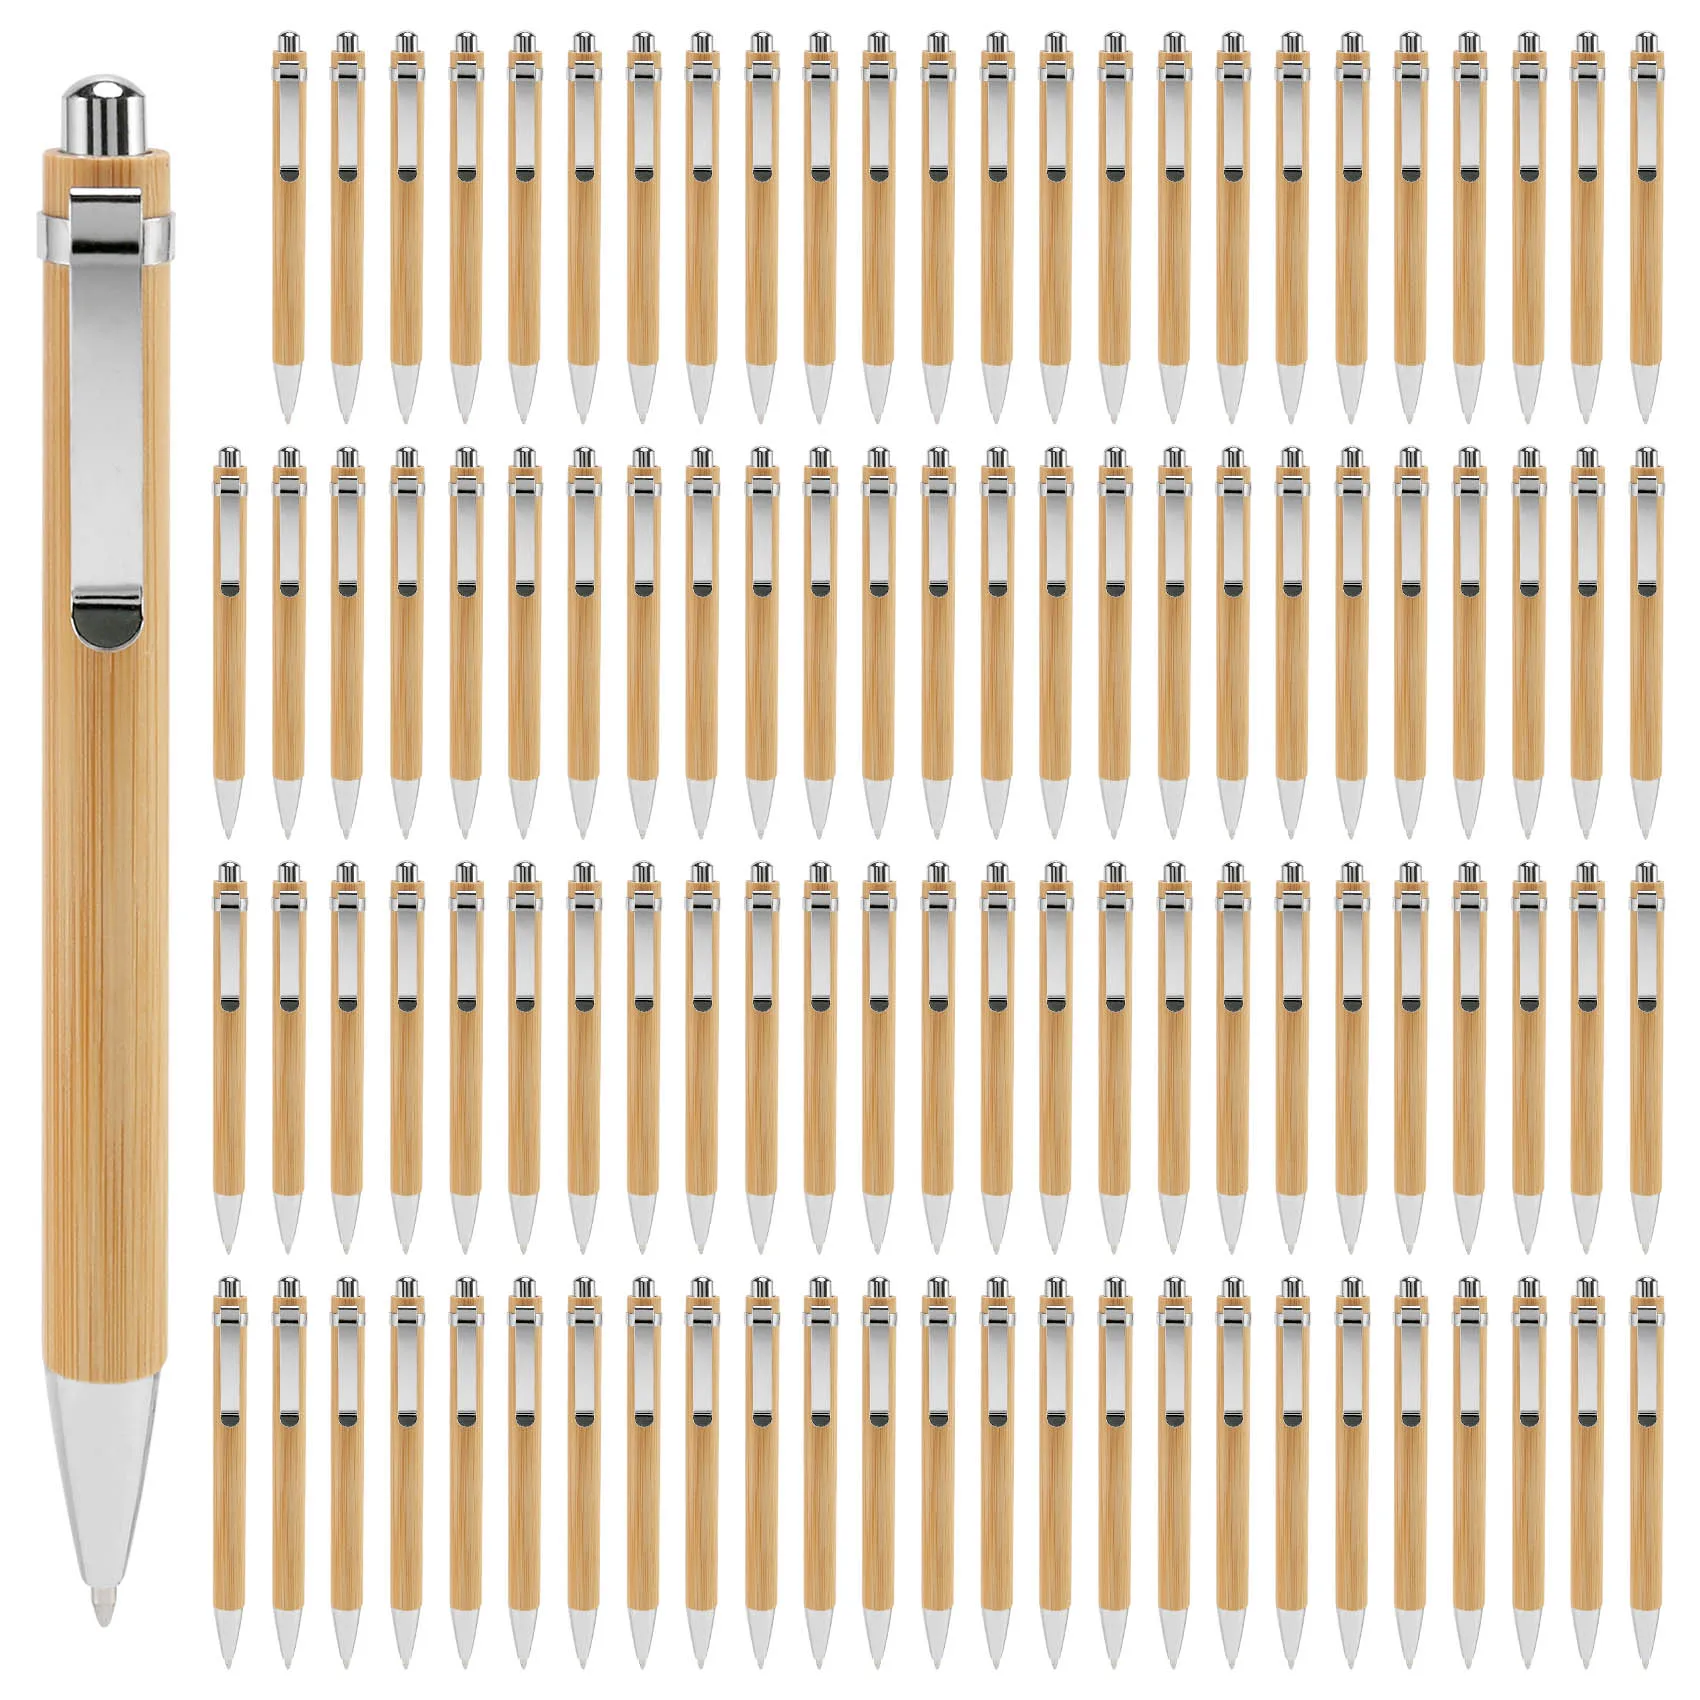 

100 Pcs/Lot Bamboo Ballpoint Pen Stylus Contact Pen Office & School Supplies Pens & Writing Supplies Gifts-Blue Ink